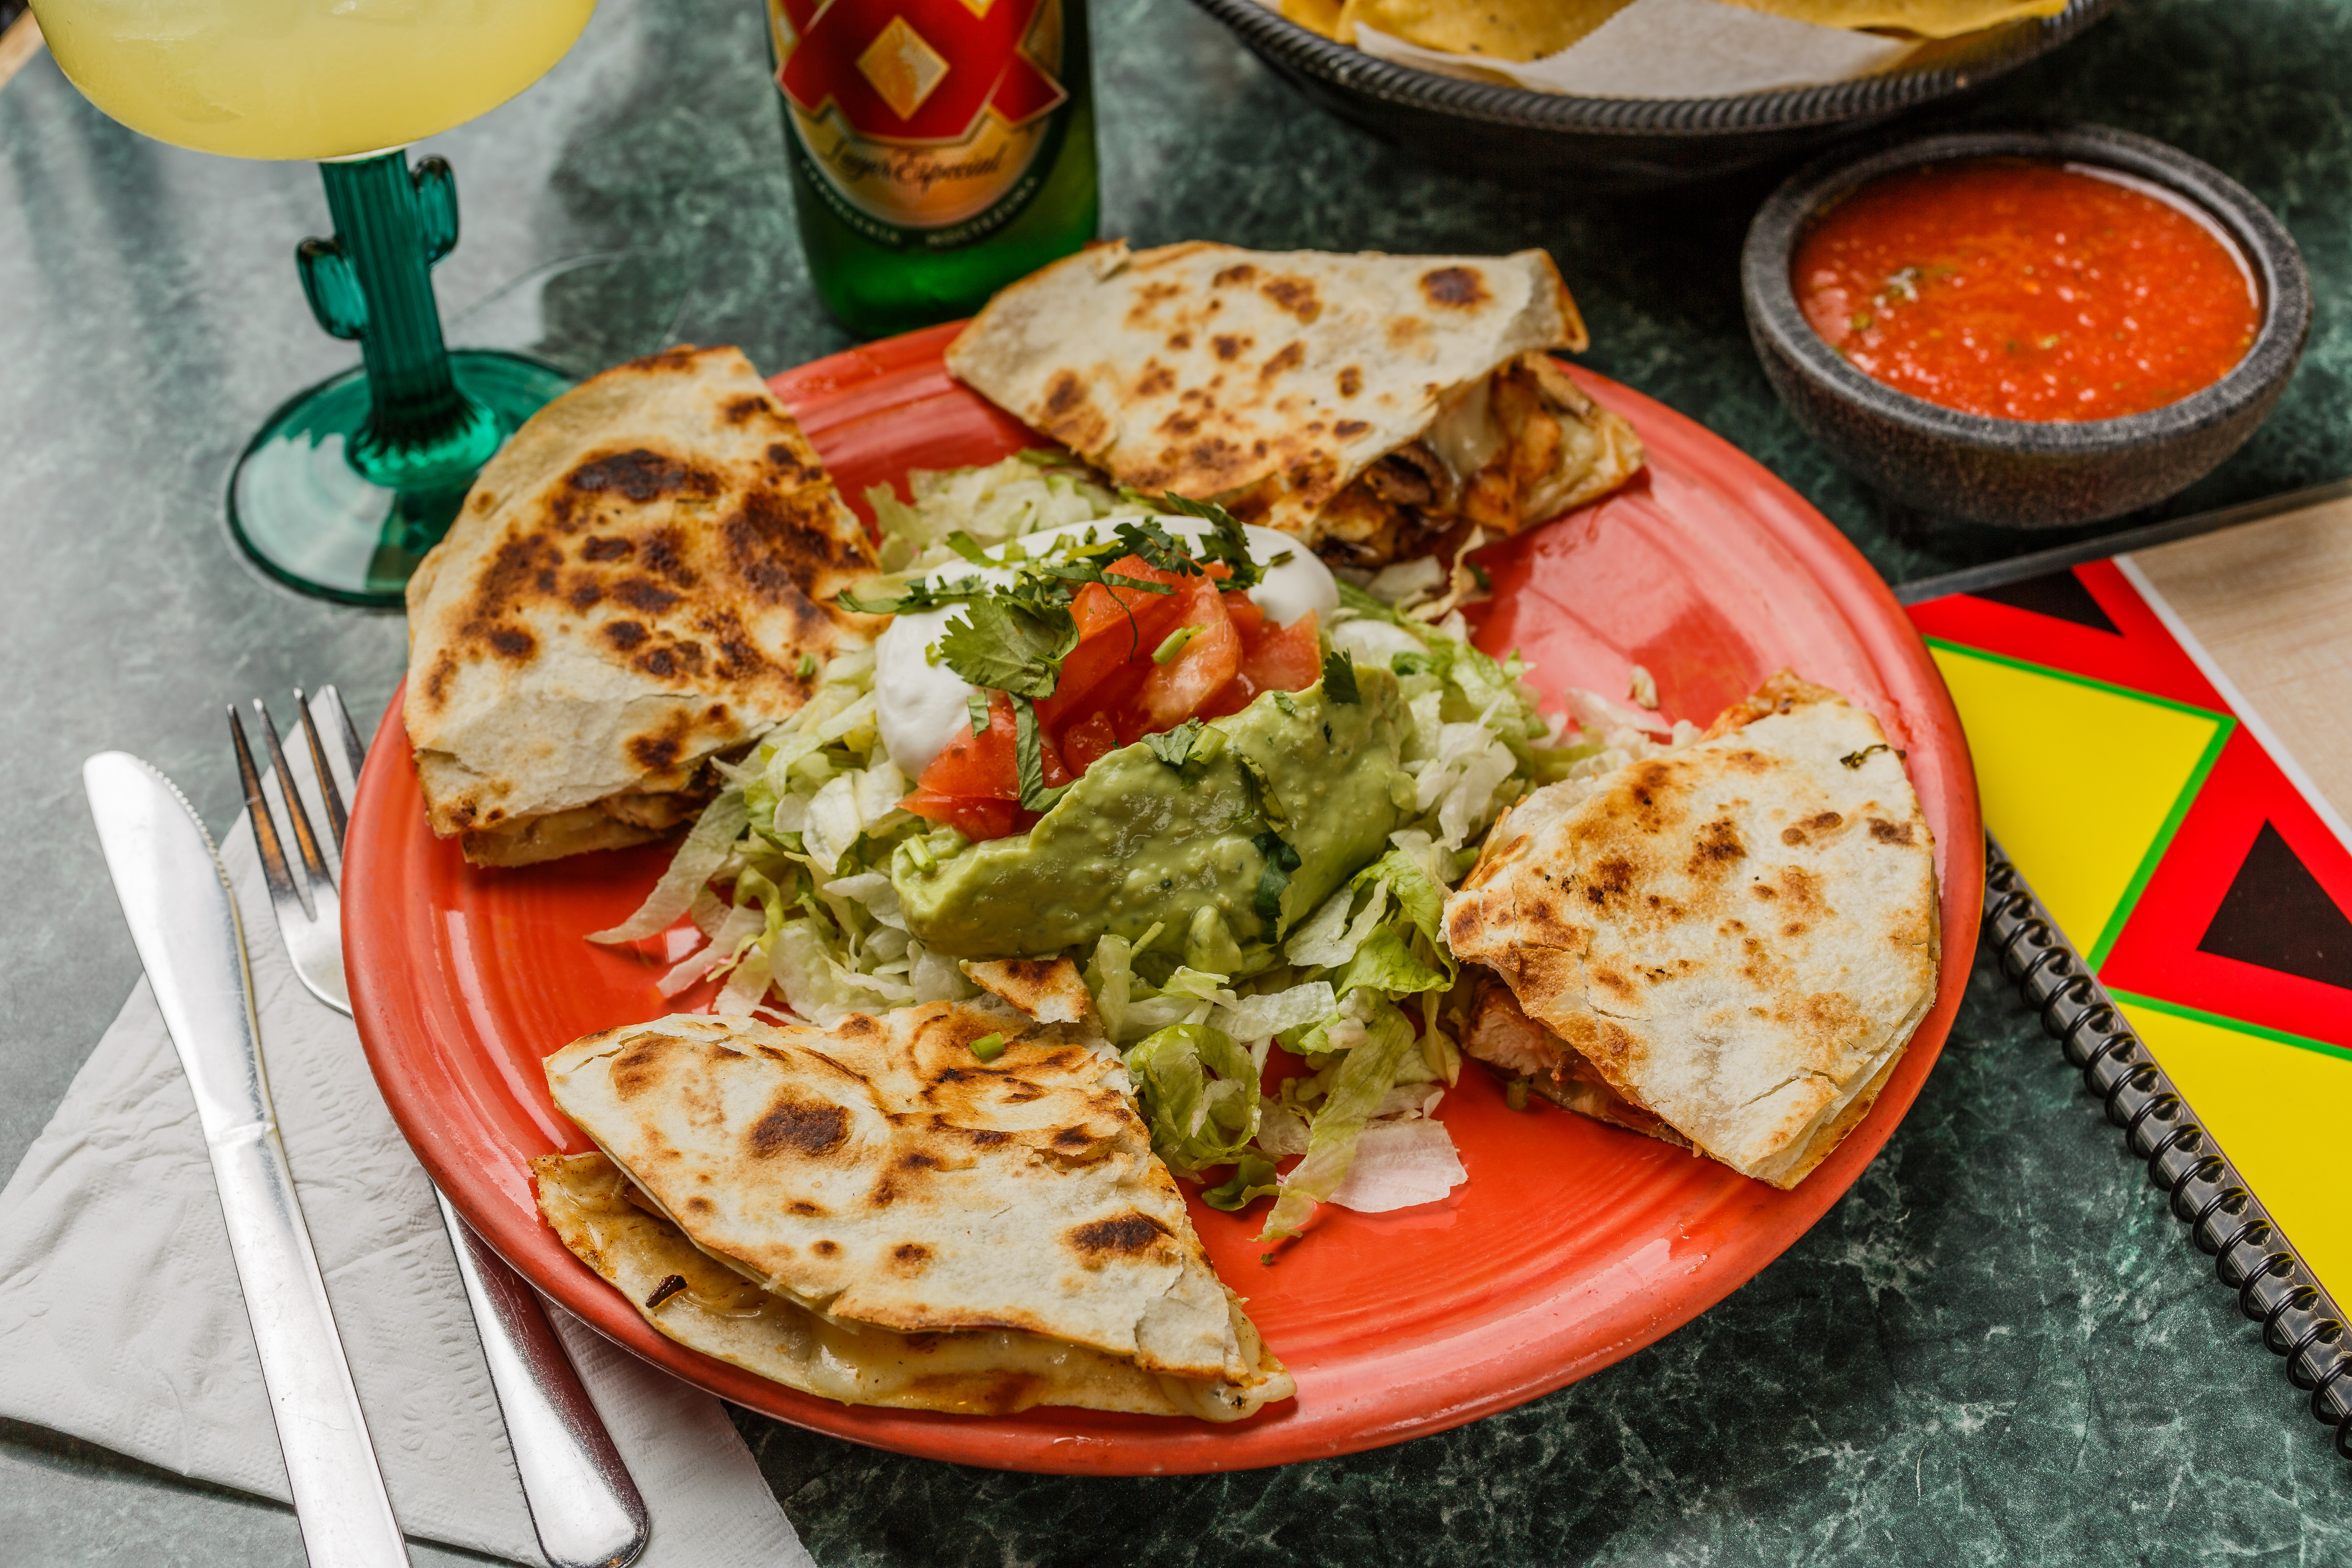 El Sombrero White Cheese Queso Longview Texas Mexican Restaurant Food Taco quesadilla fajita